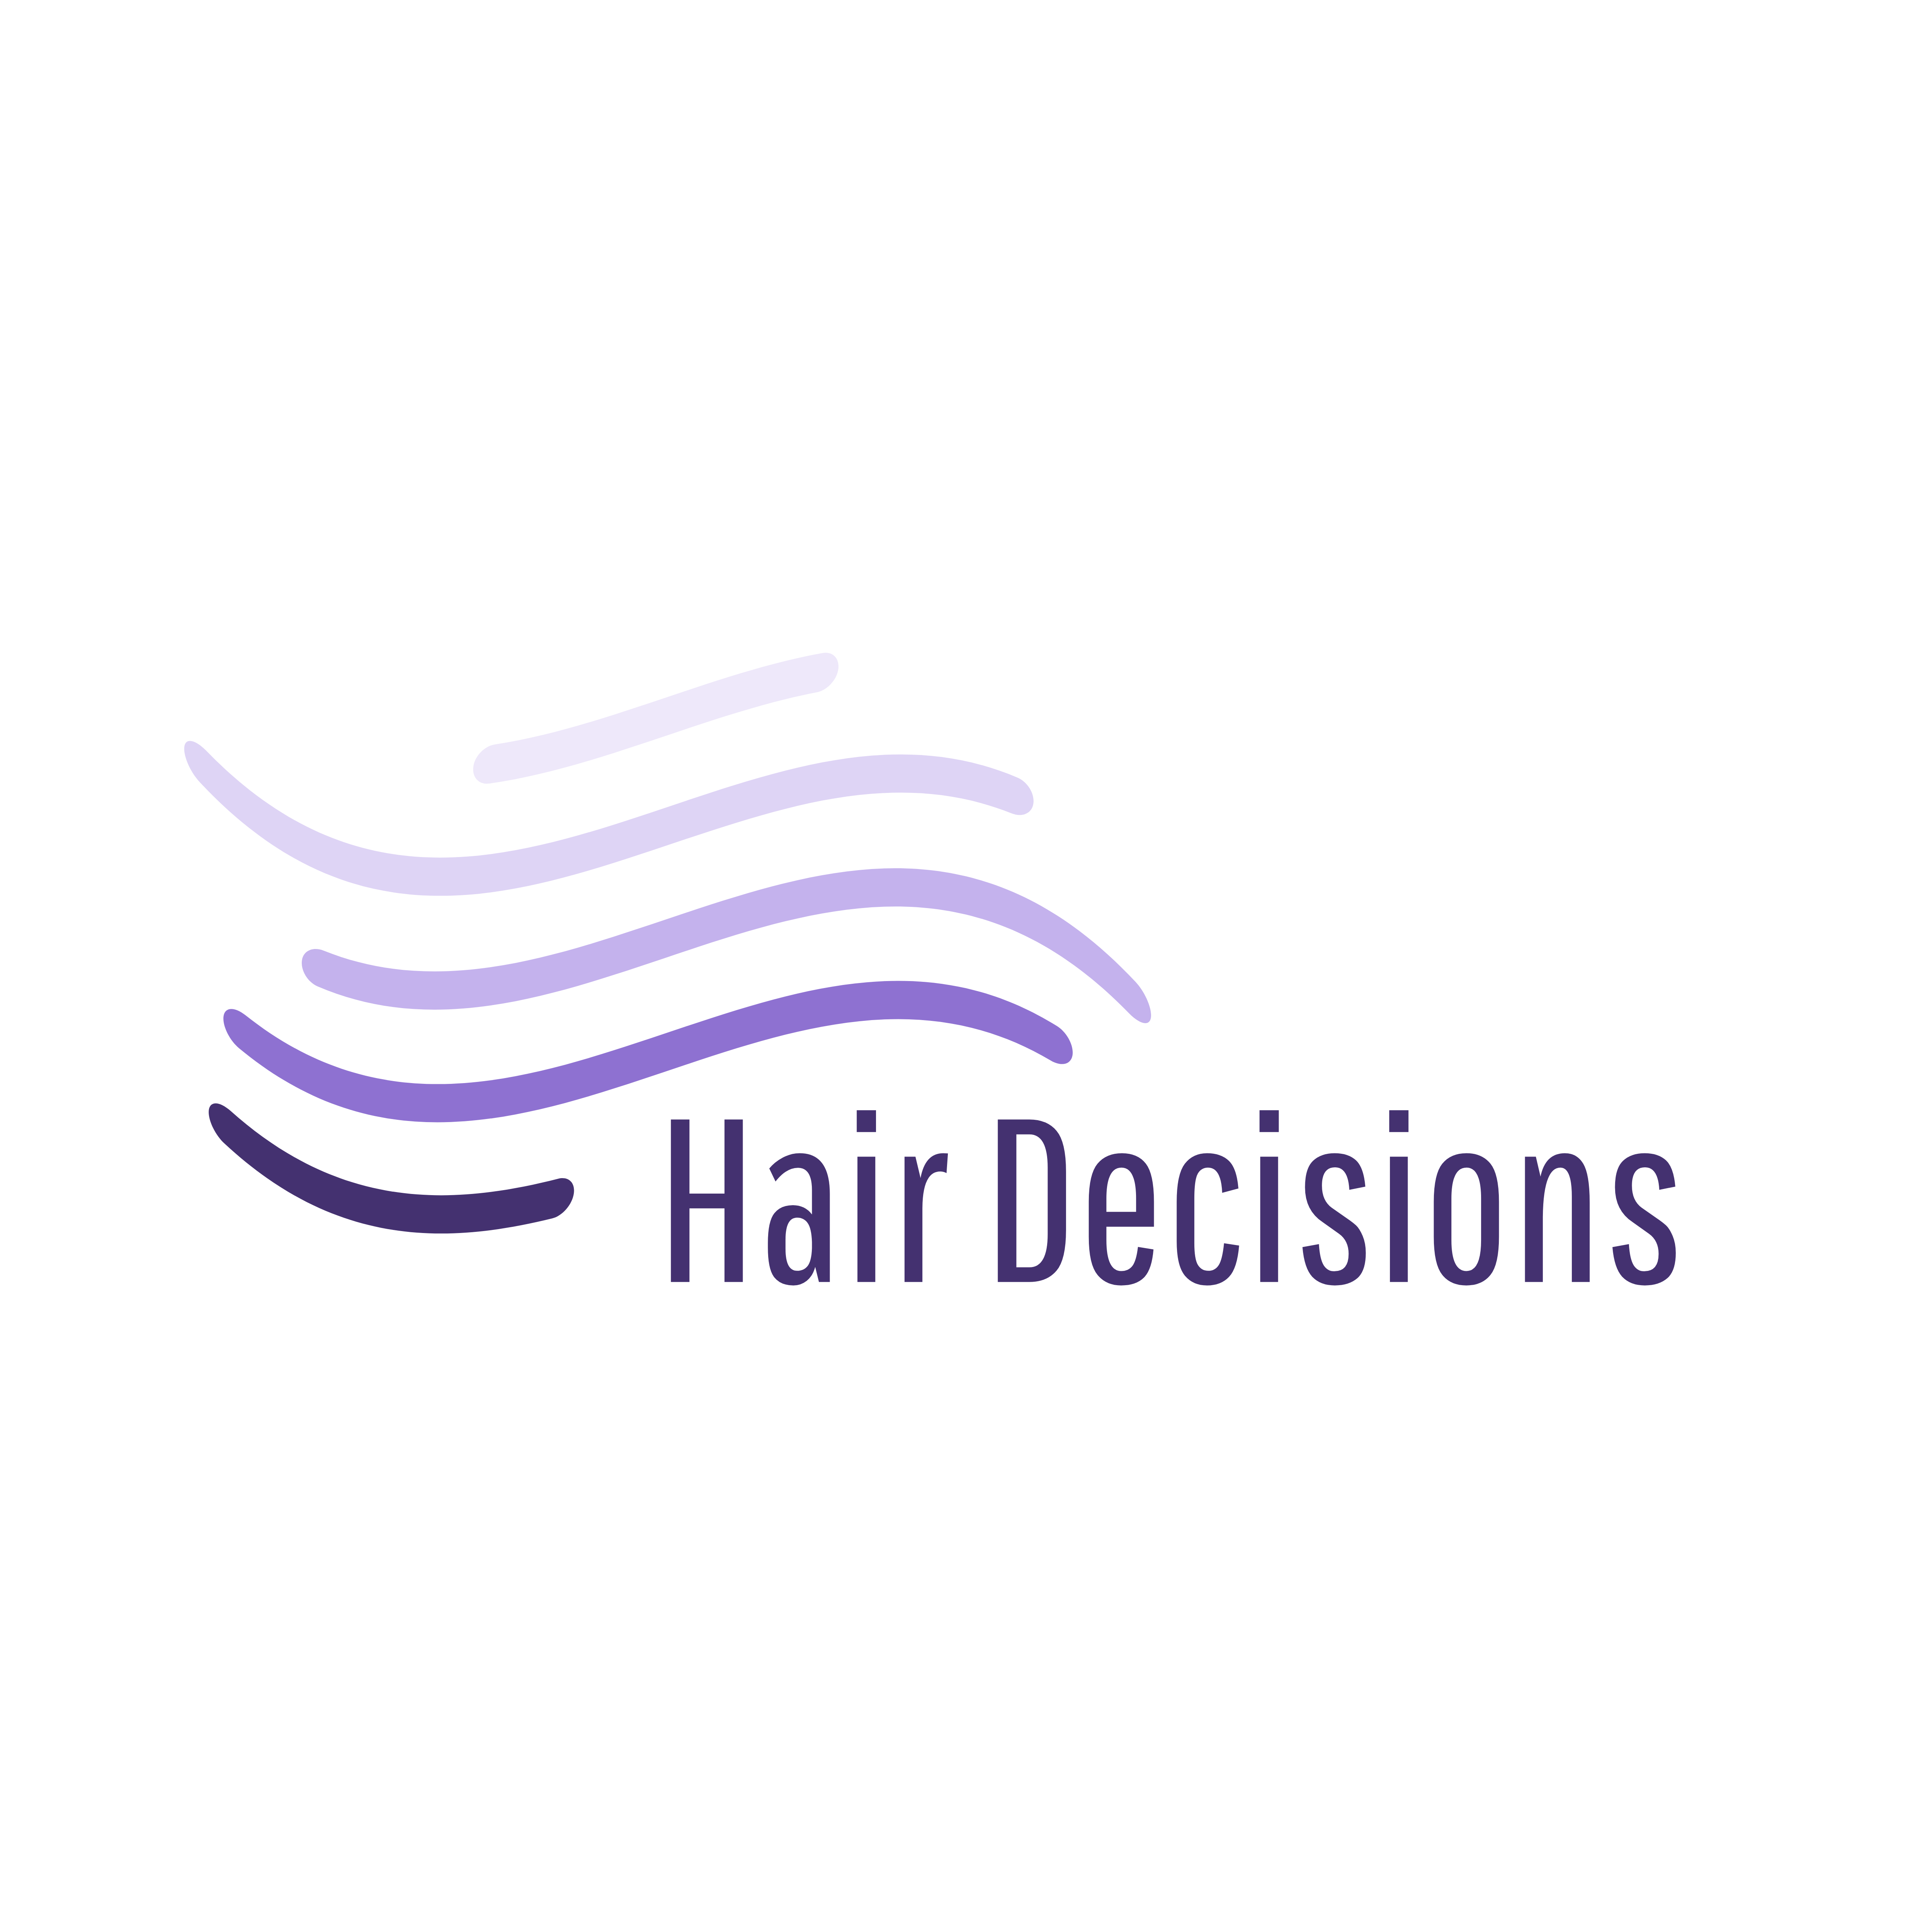 Hair Decisions Logo